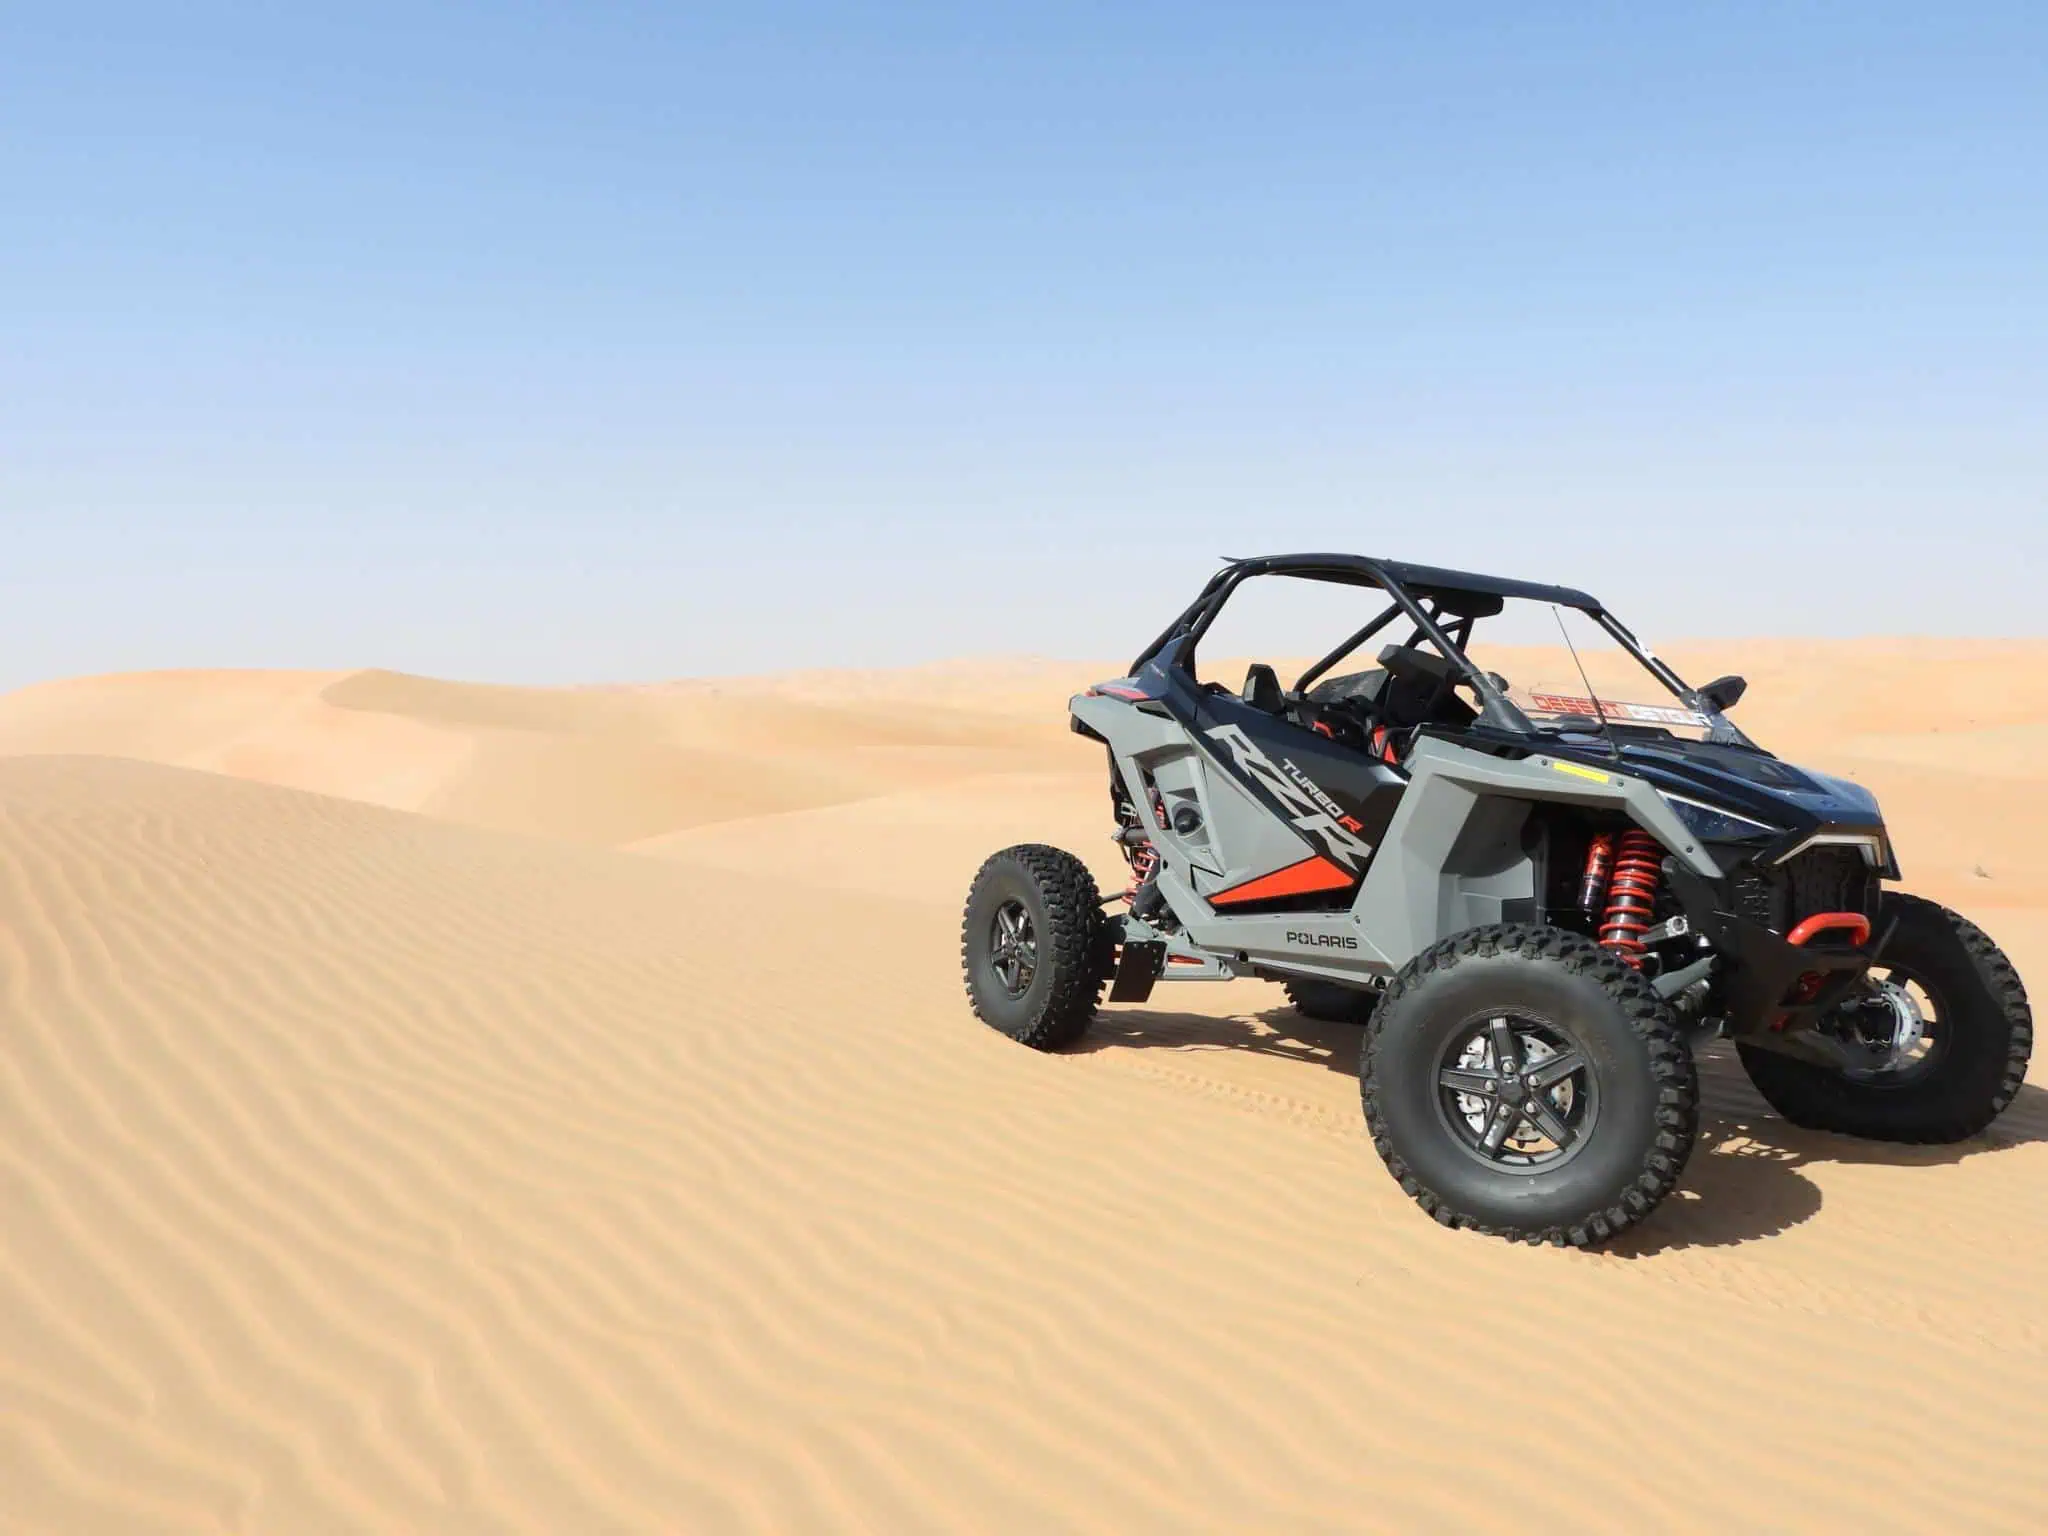 Why You Should Do A Desert Run To Explore The Dubai Desert